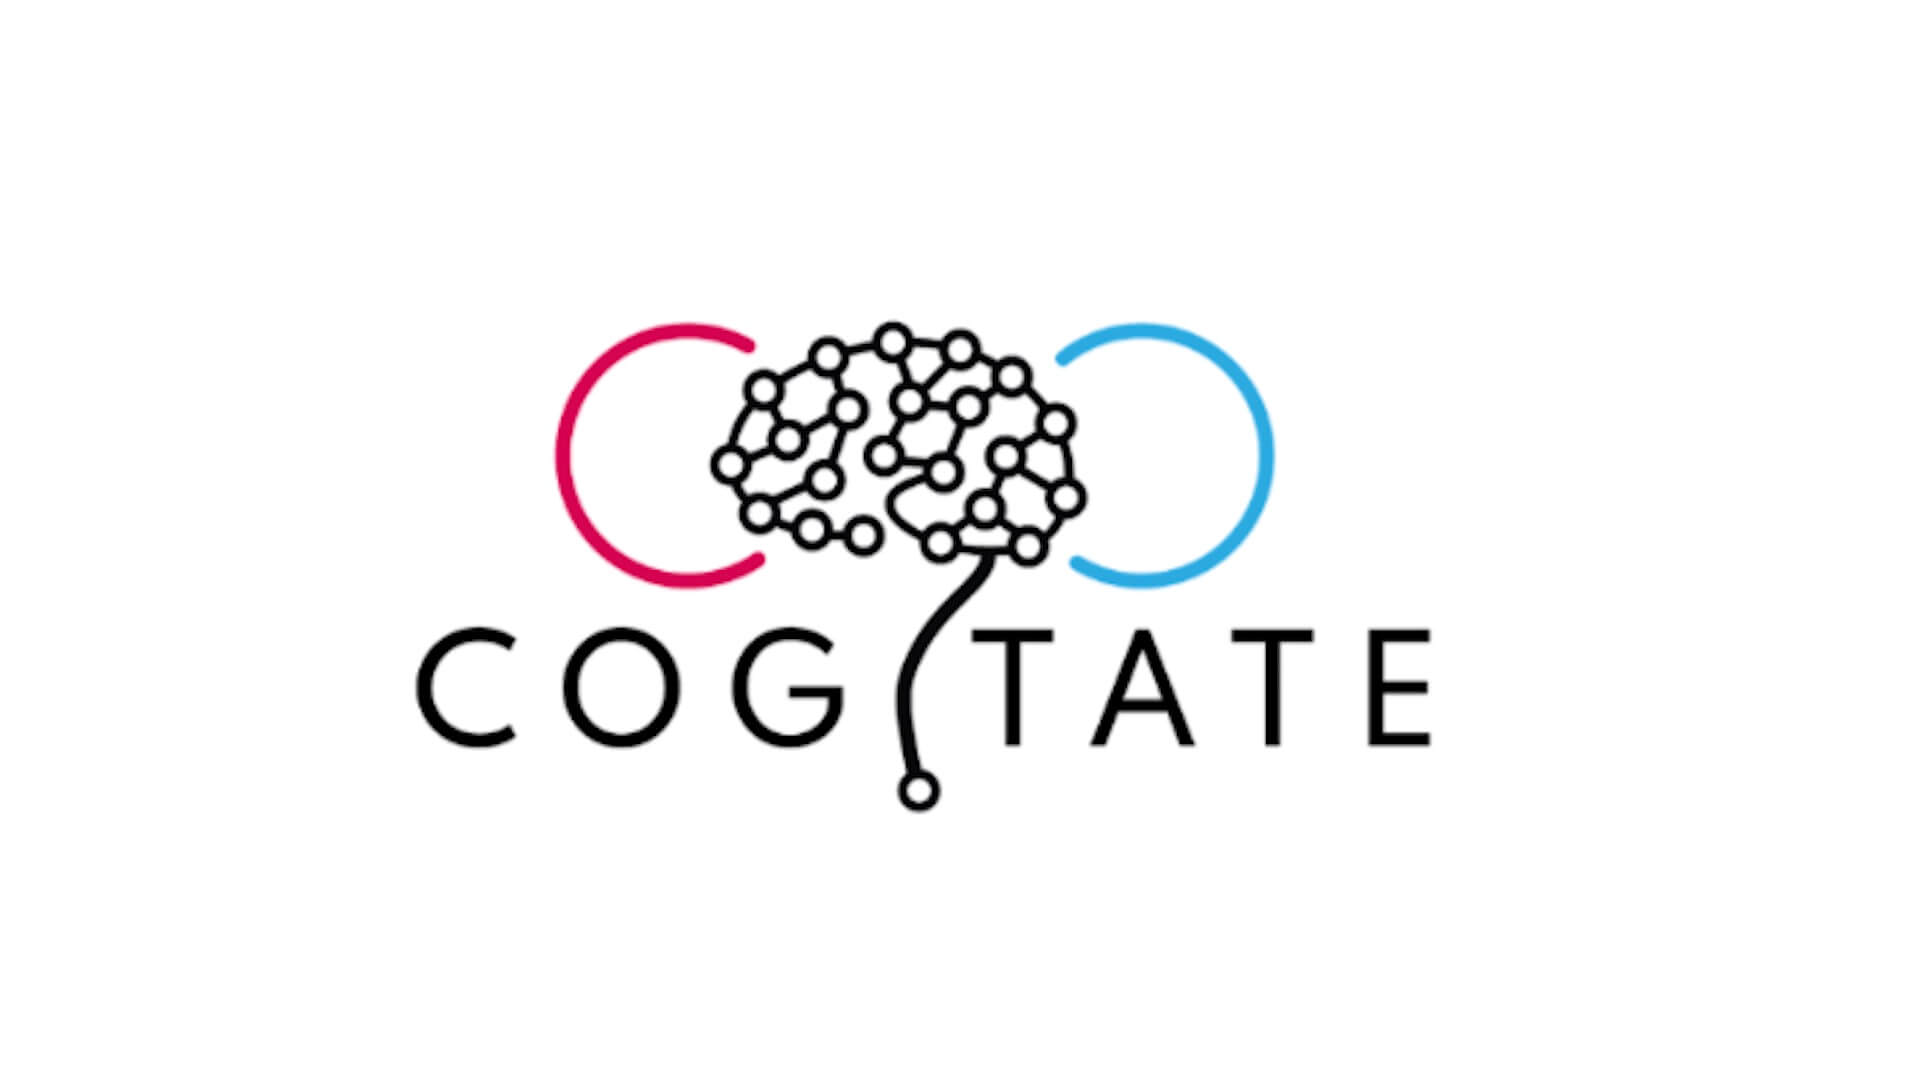 Cogate Image